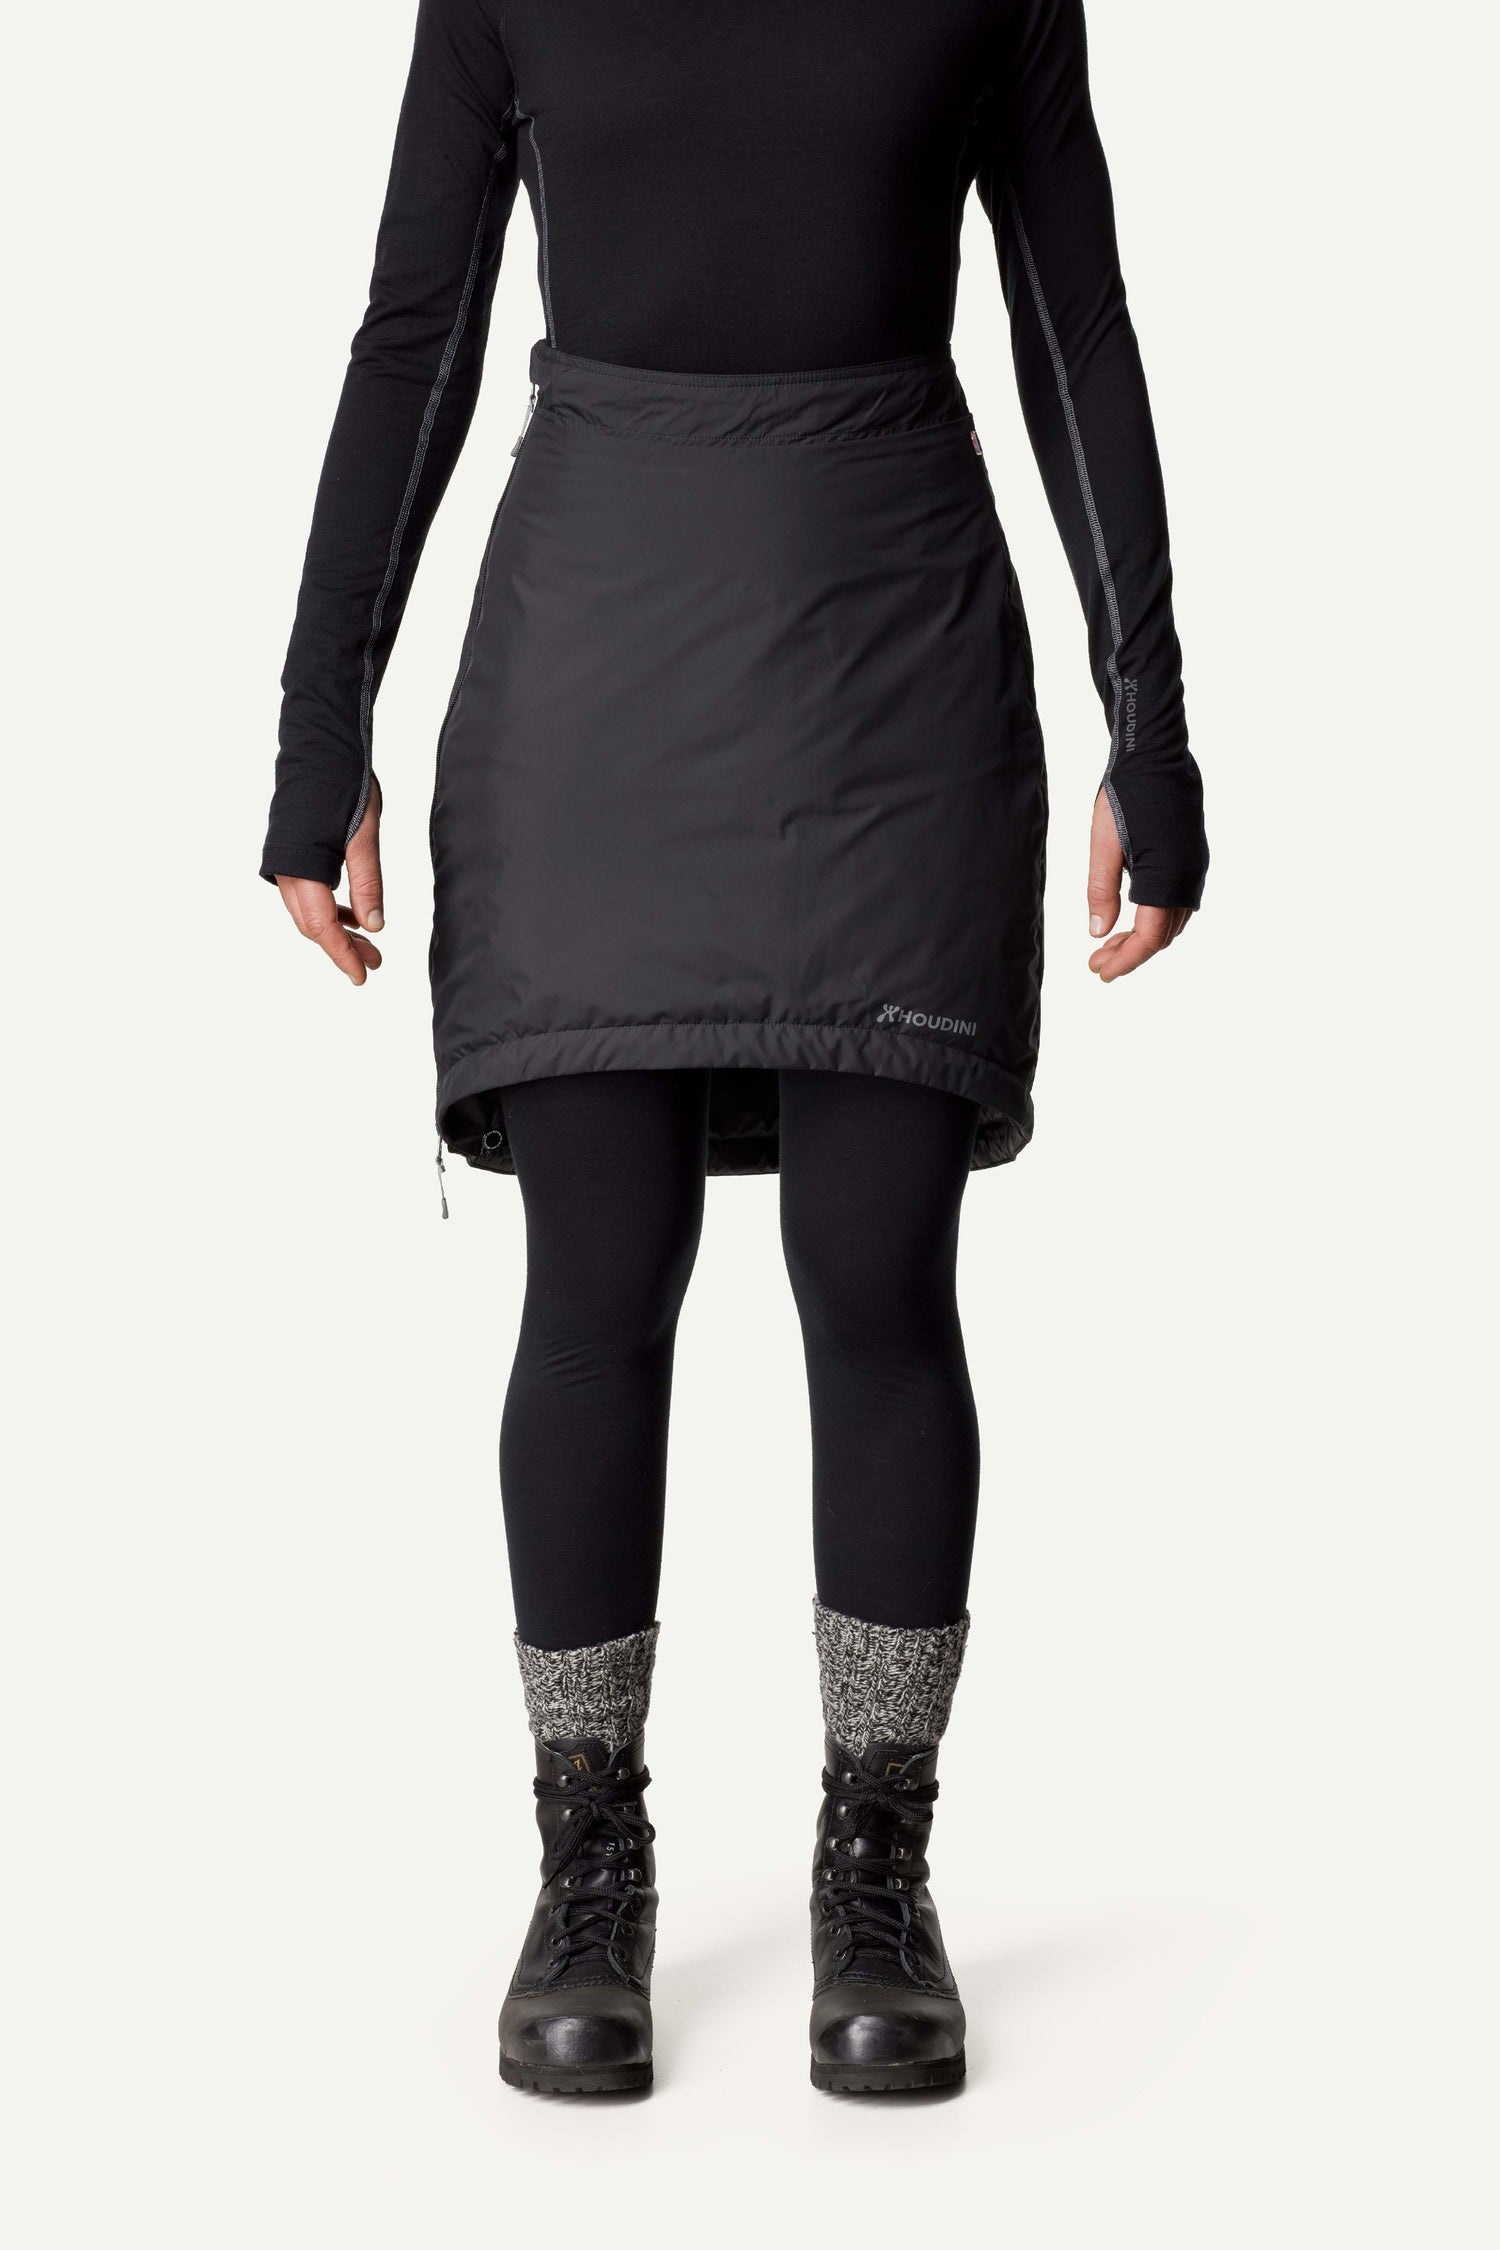 Houdini Unisex Sleepwalker - Recycled Polyester True Black Skirt